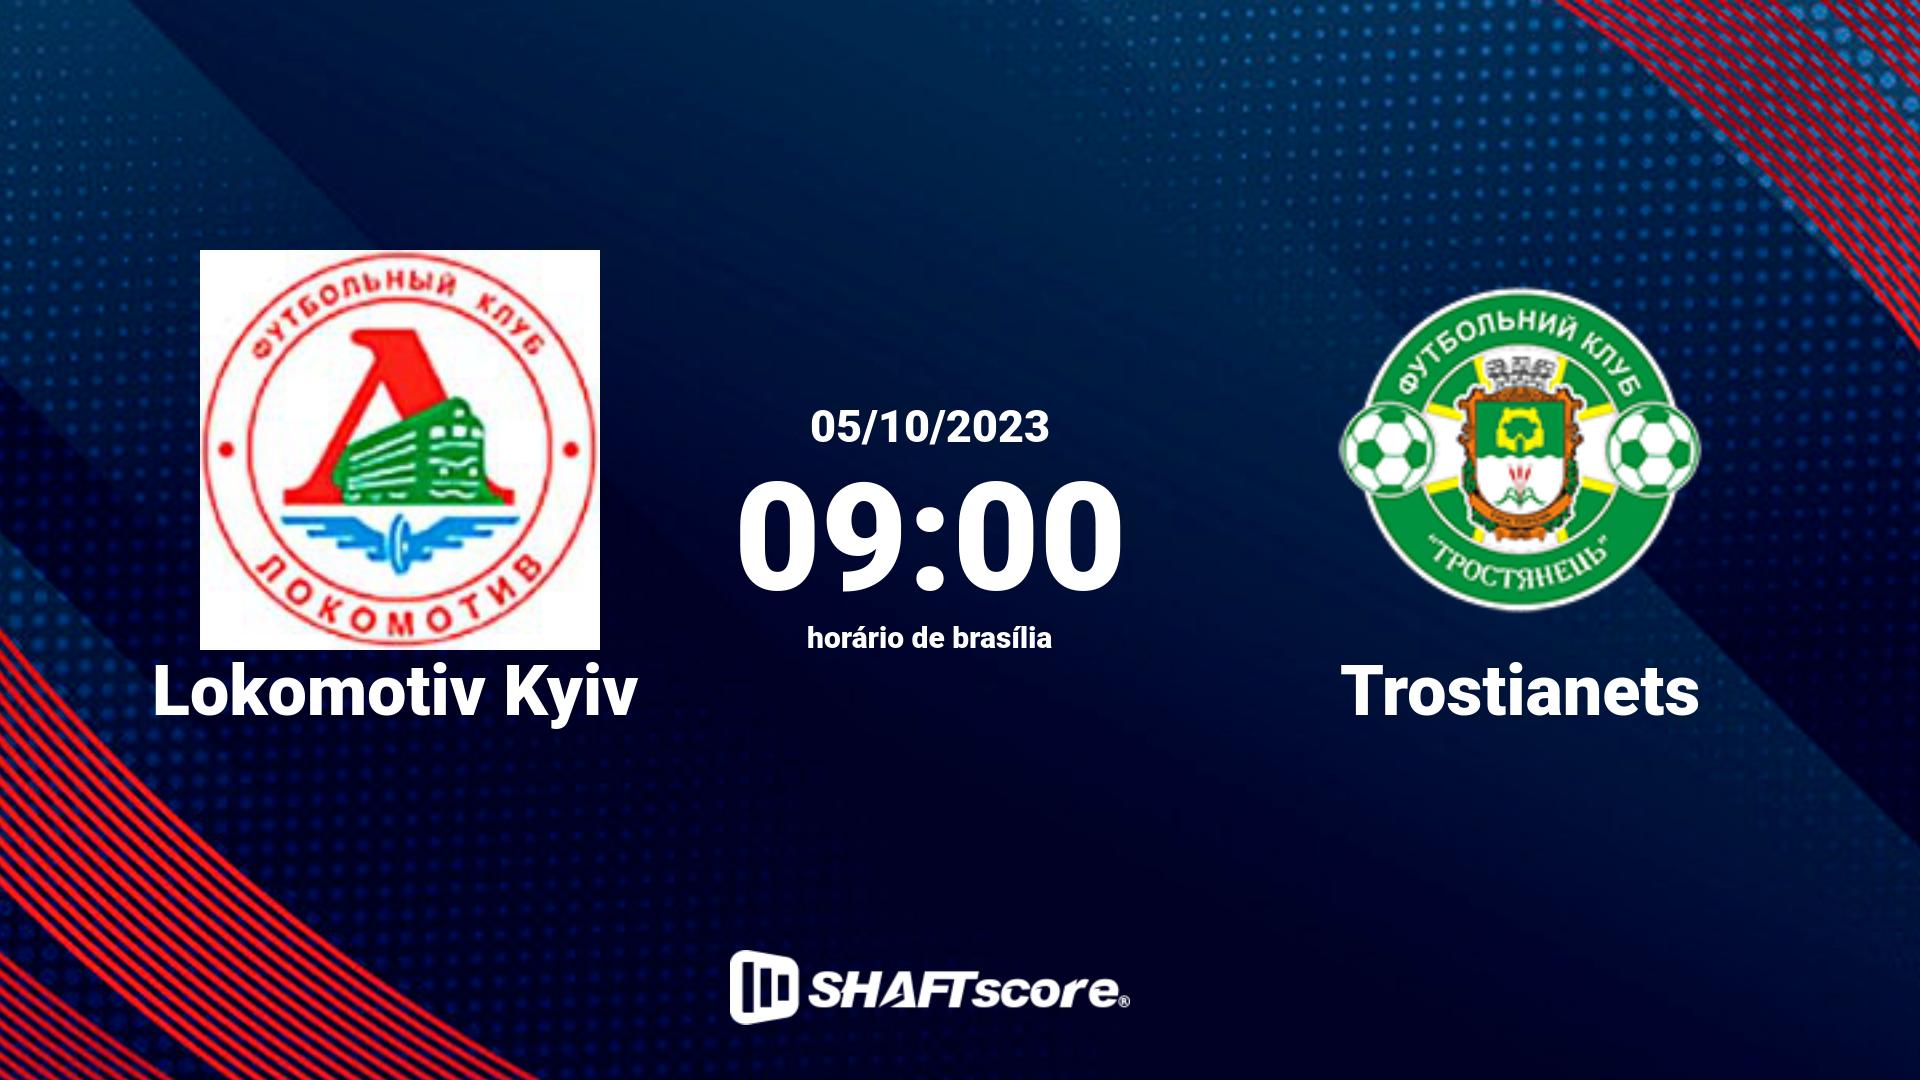 Estatísticas do jogo Lokomotiv Kyiv vs Trostianets 05.10 09:00